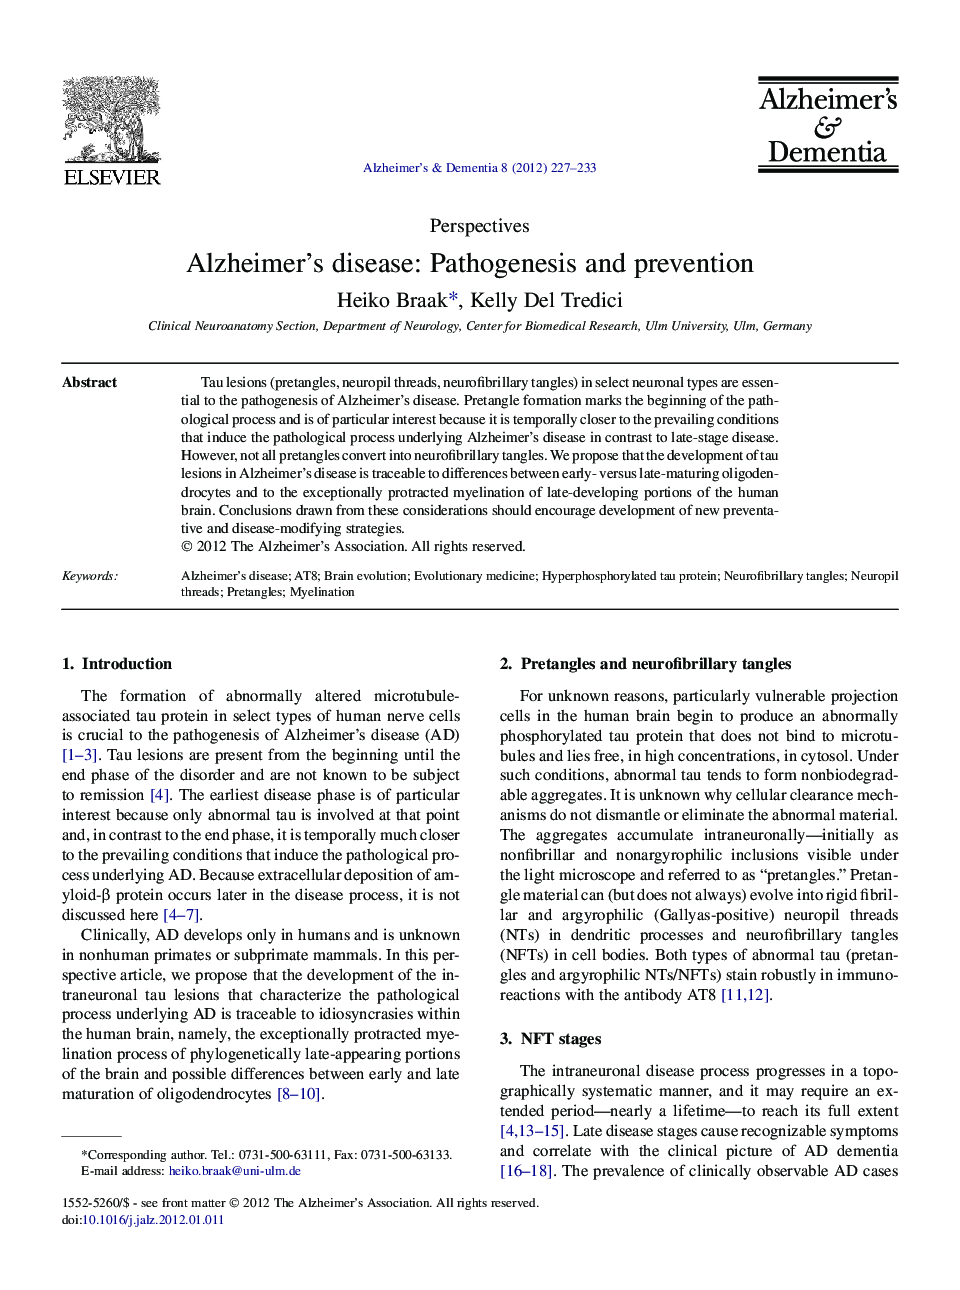 PerspectiveAlzheimer's disease: Pathogenesis and prevention